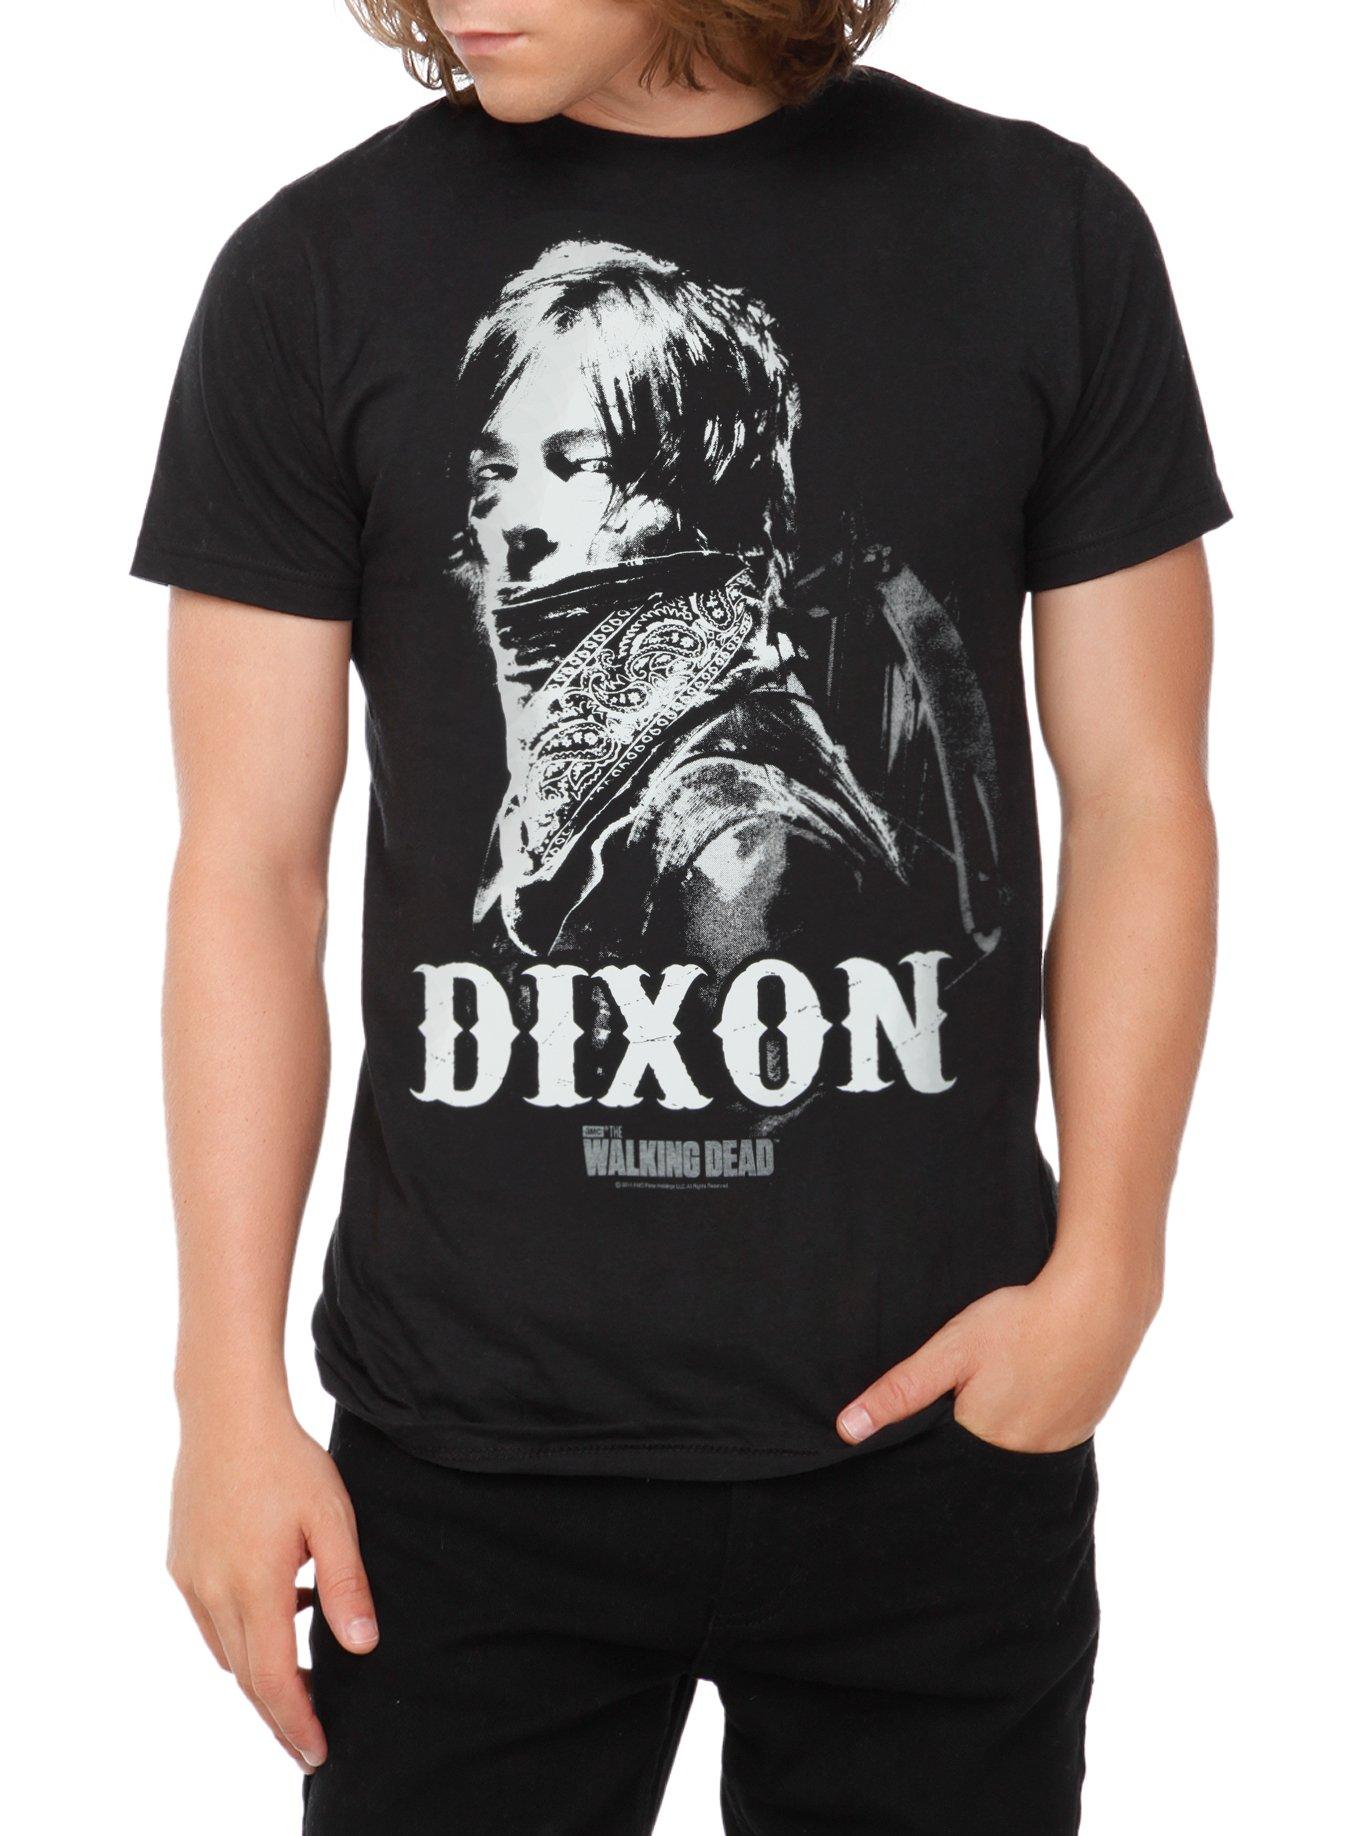 The Walking Dead Daryl Dixon T-Shirt